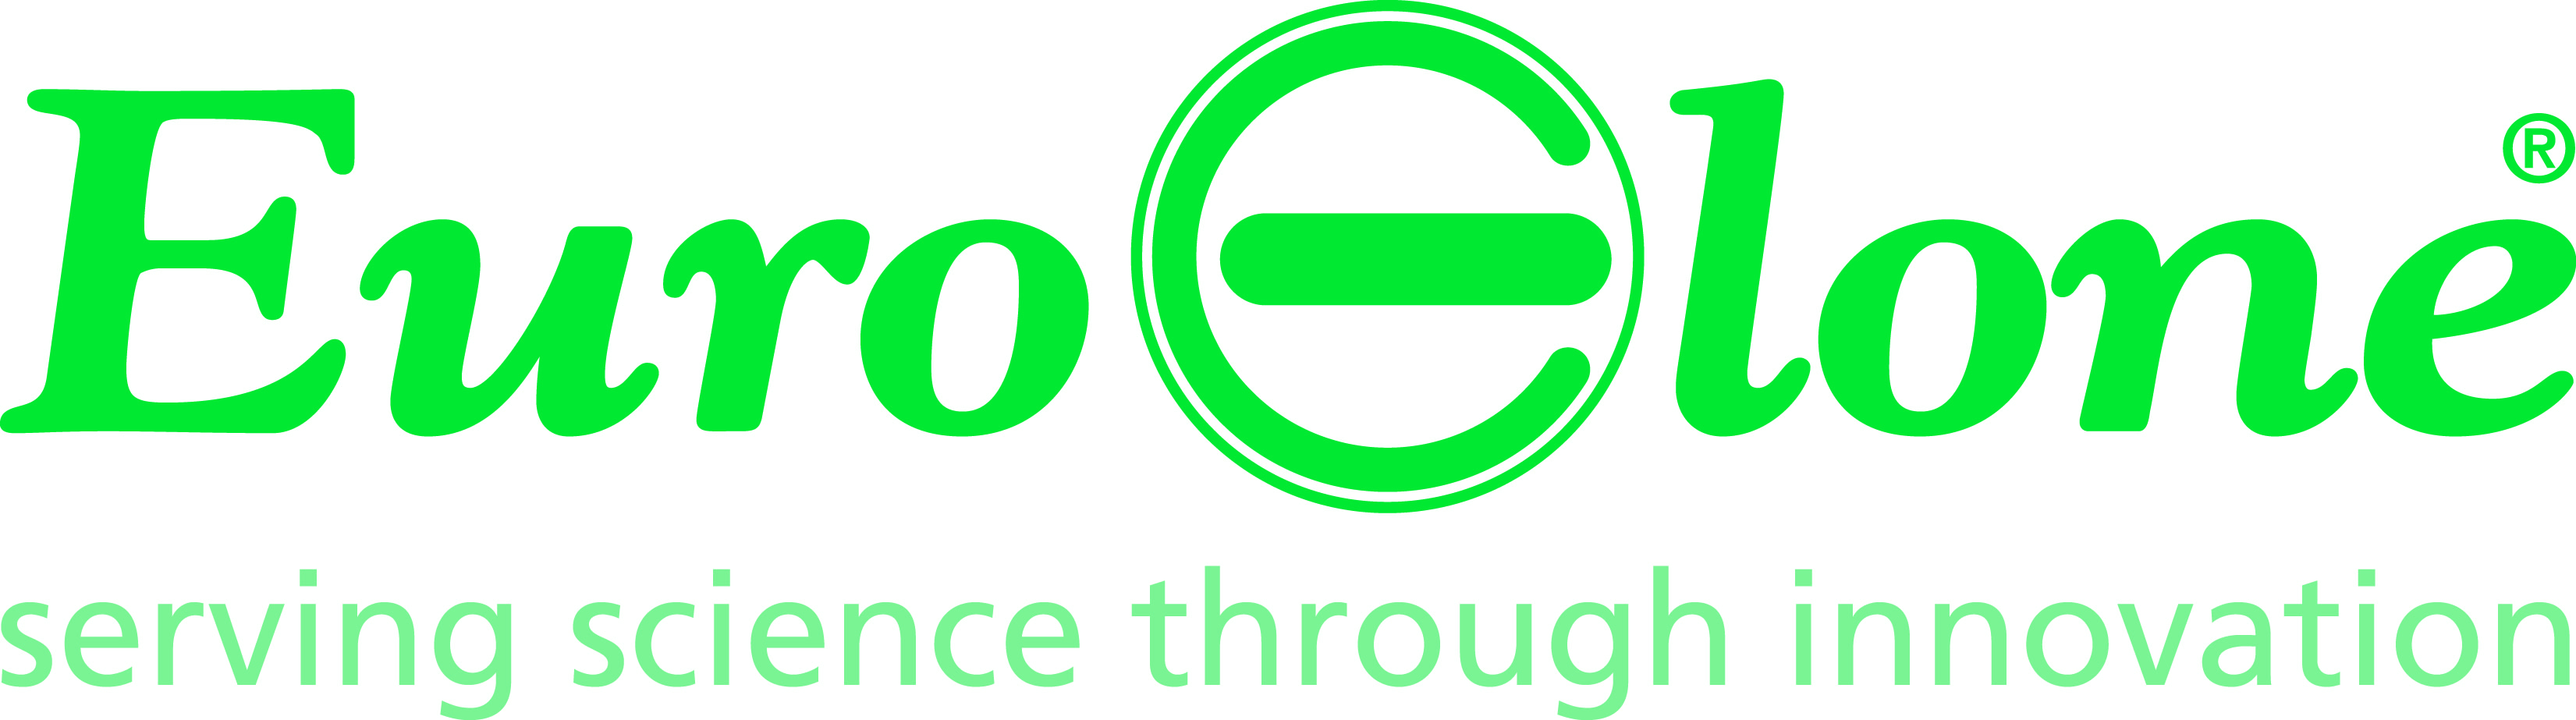 2018-07/def_logo-euroclone.jpg